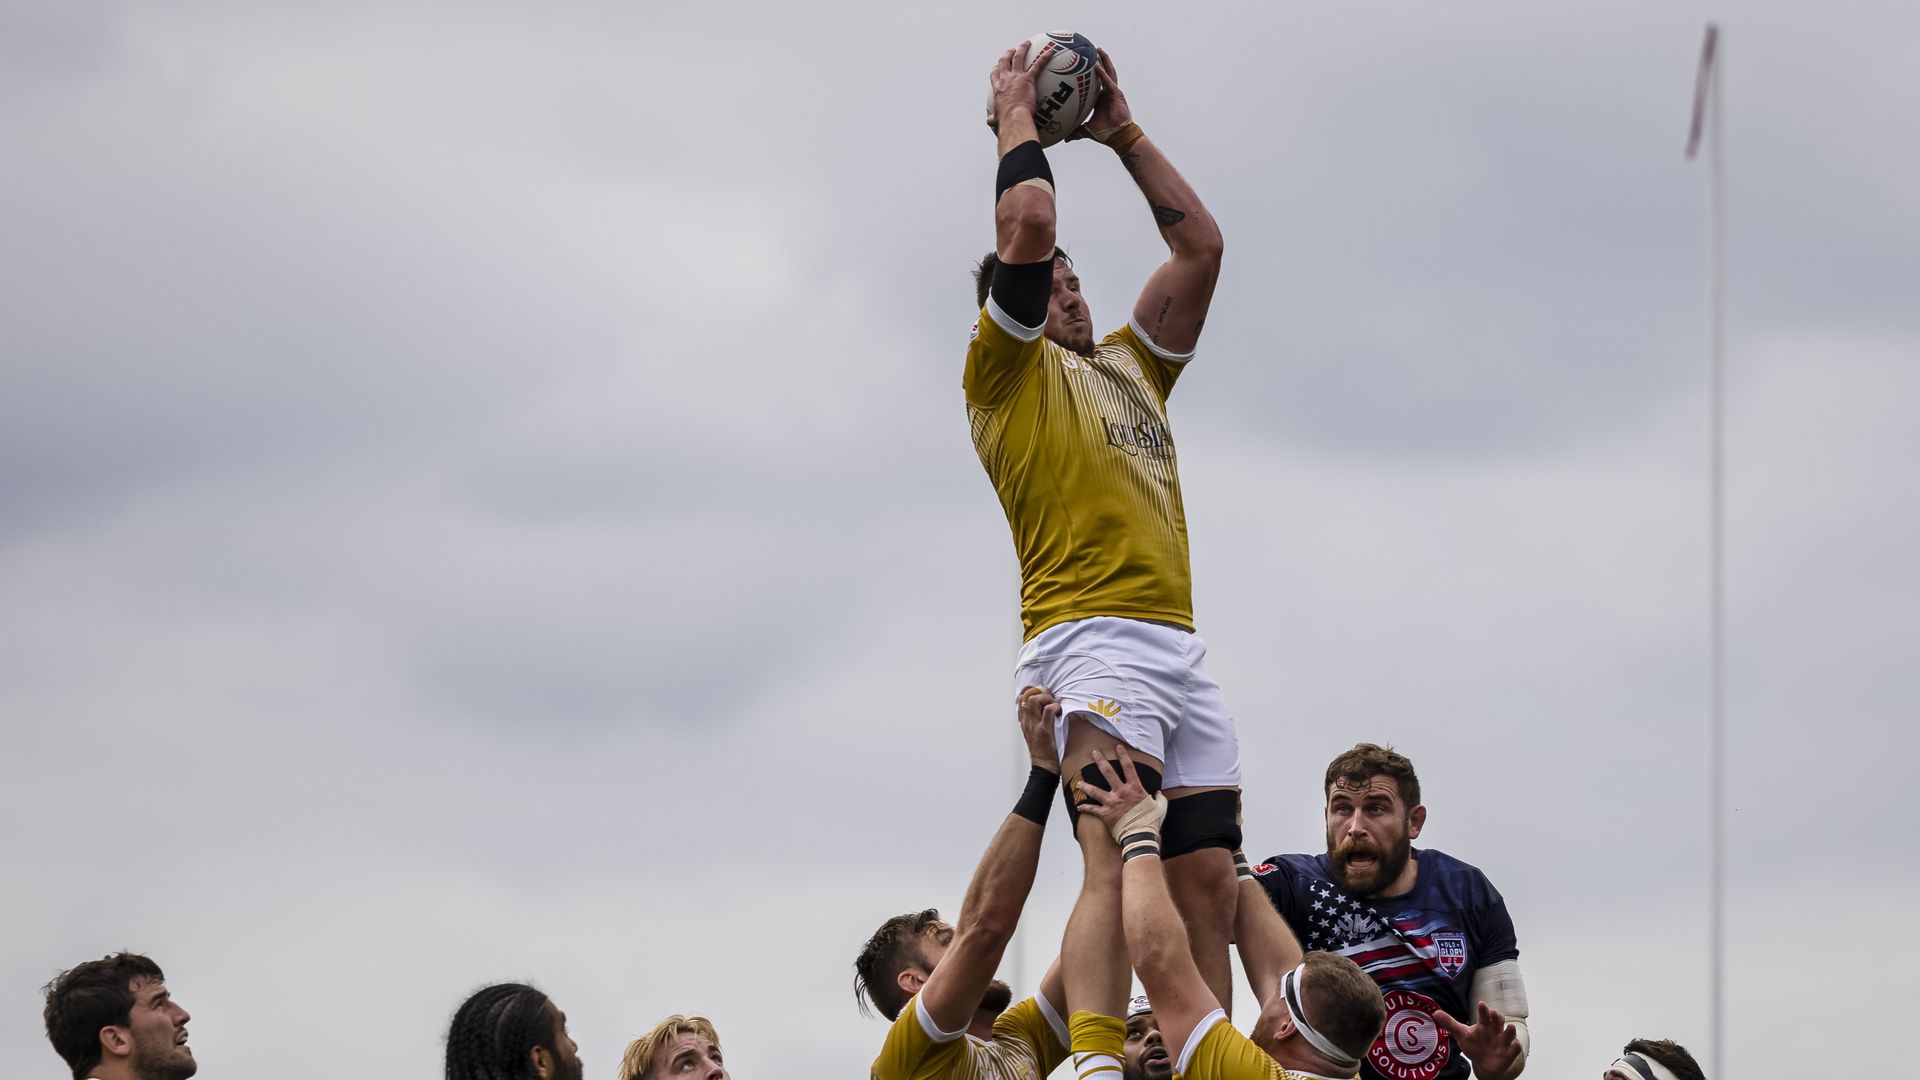 Nikola Bursic hoists a rugby ball in the air as his teammates hold him aloft above them.